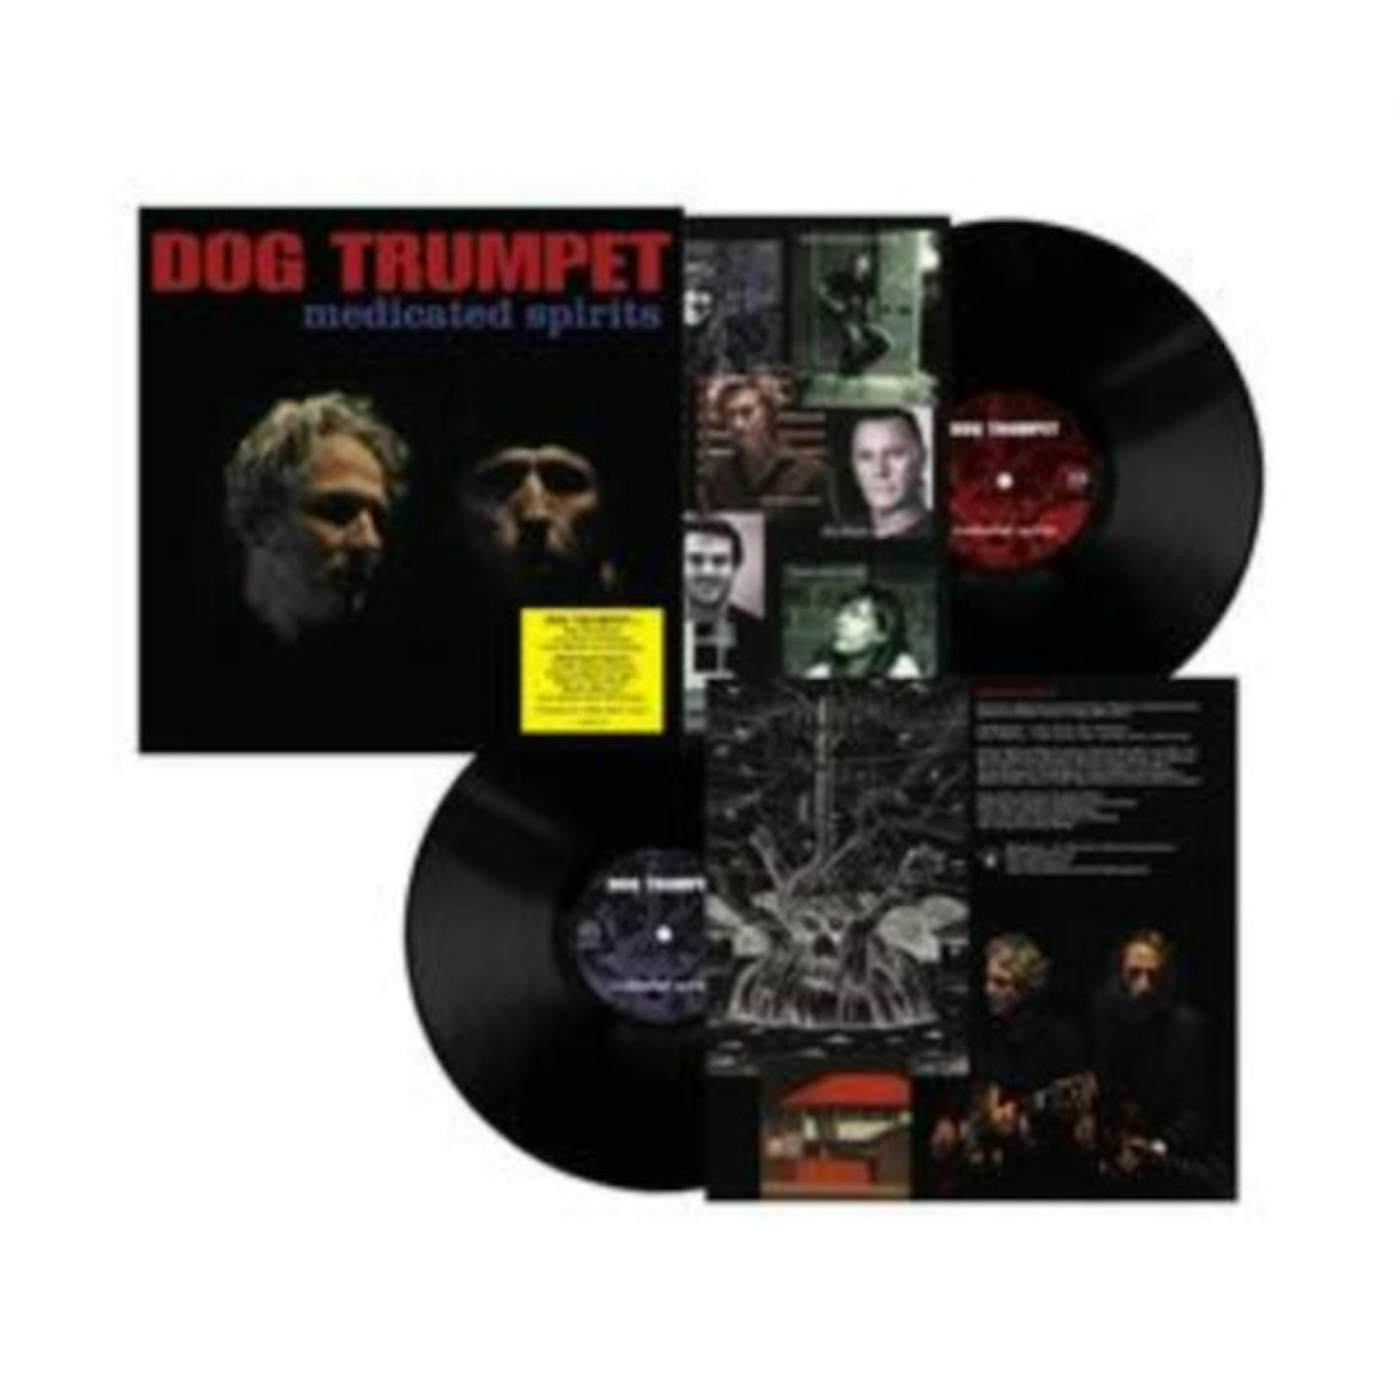 Dog Trumpet LP - Medicated Spirits (Vinyl)